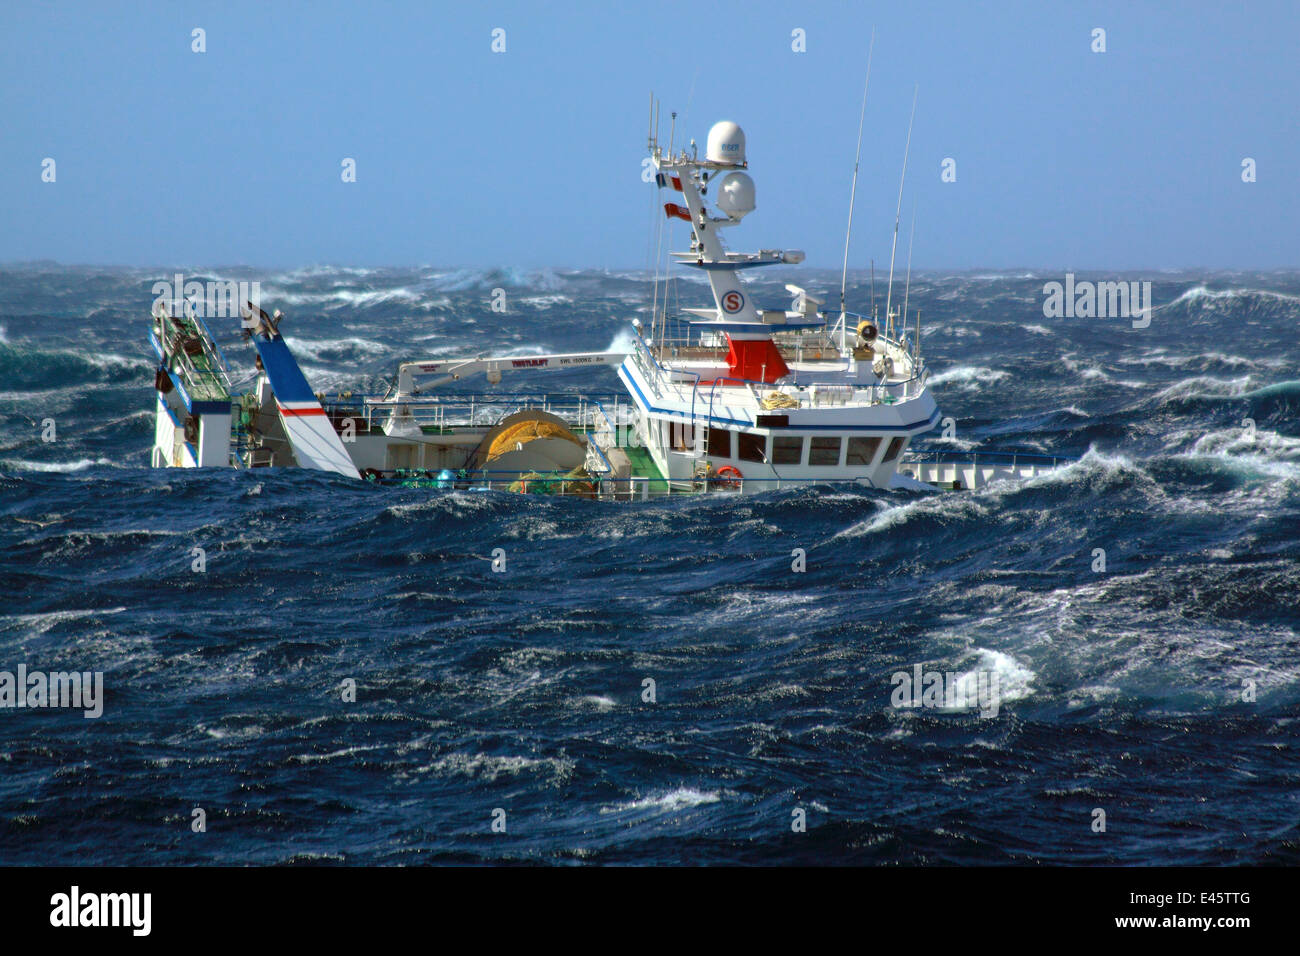 Fishing vessel Ocean Harvest in huge waves on the North Sea September 2010. Property released. Stock Photo